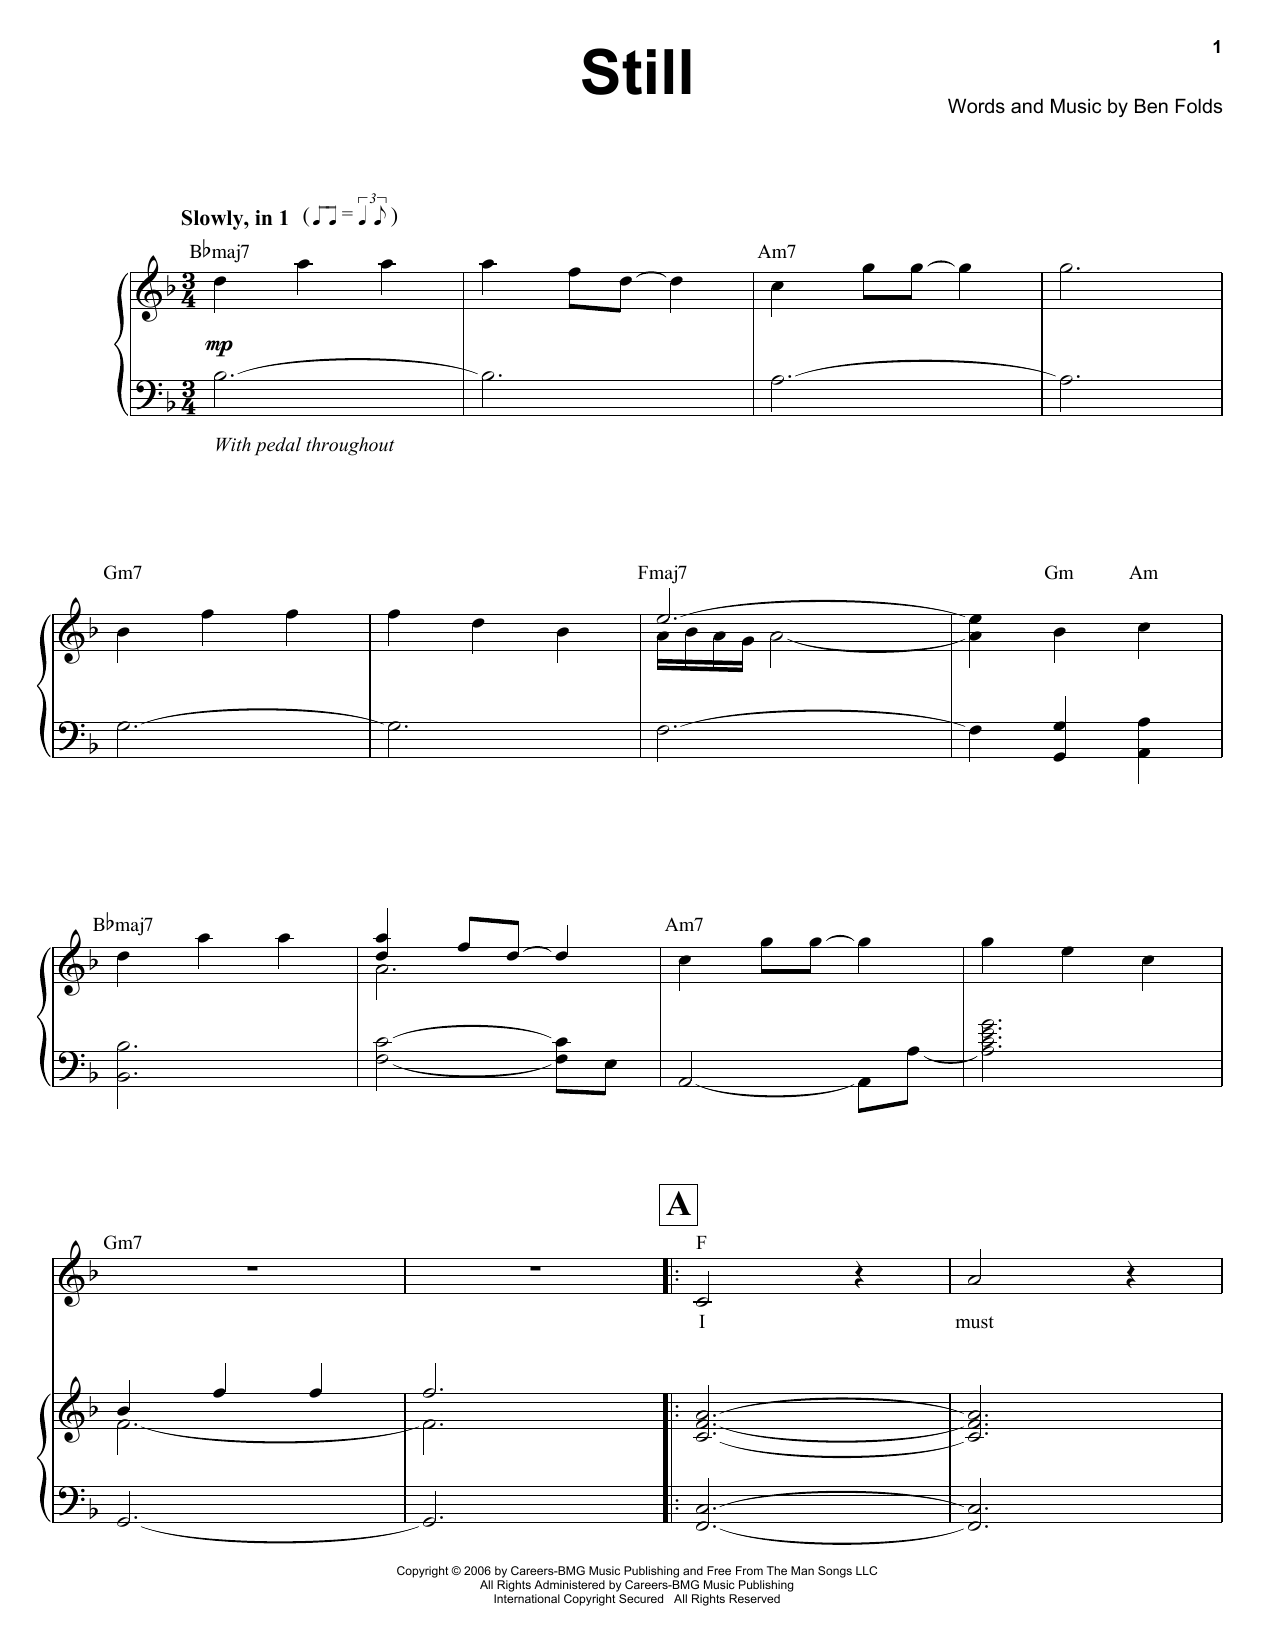 Ben Folds Still Sheet Music Notes & Chords for Keyboard Transcription - Download or Print PDF